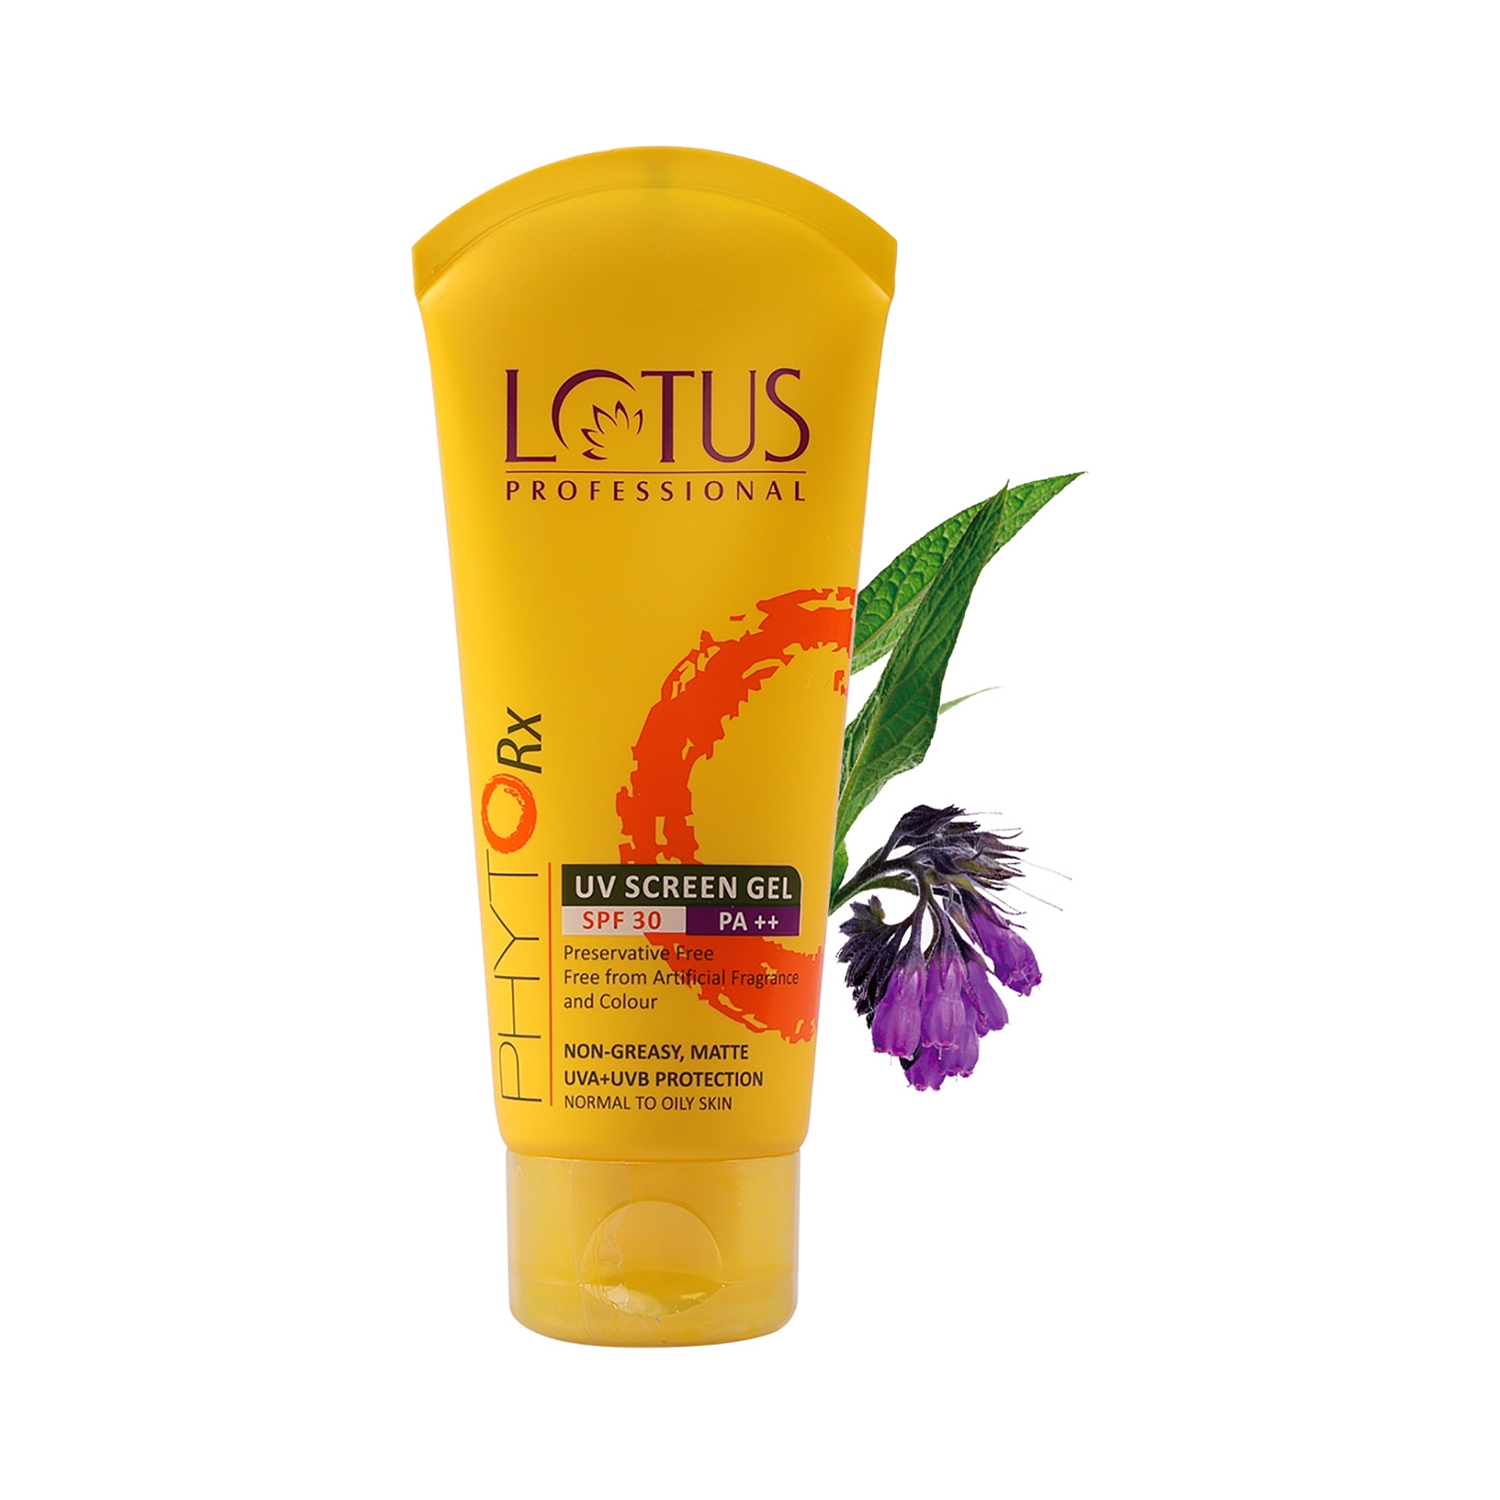 Lotus Professional | Lotus Professional Phytorx UV Screen Gel SPF 30 PA++ (80g)